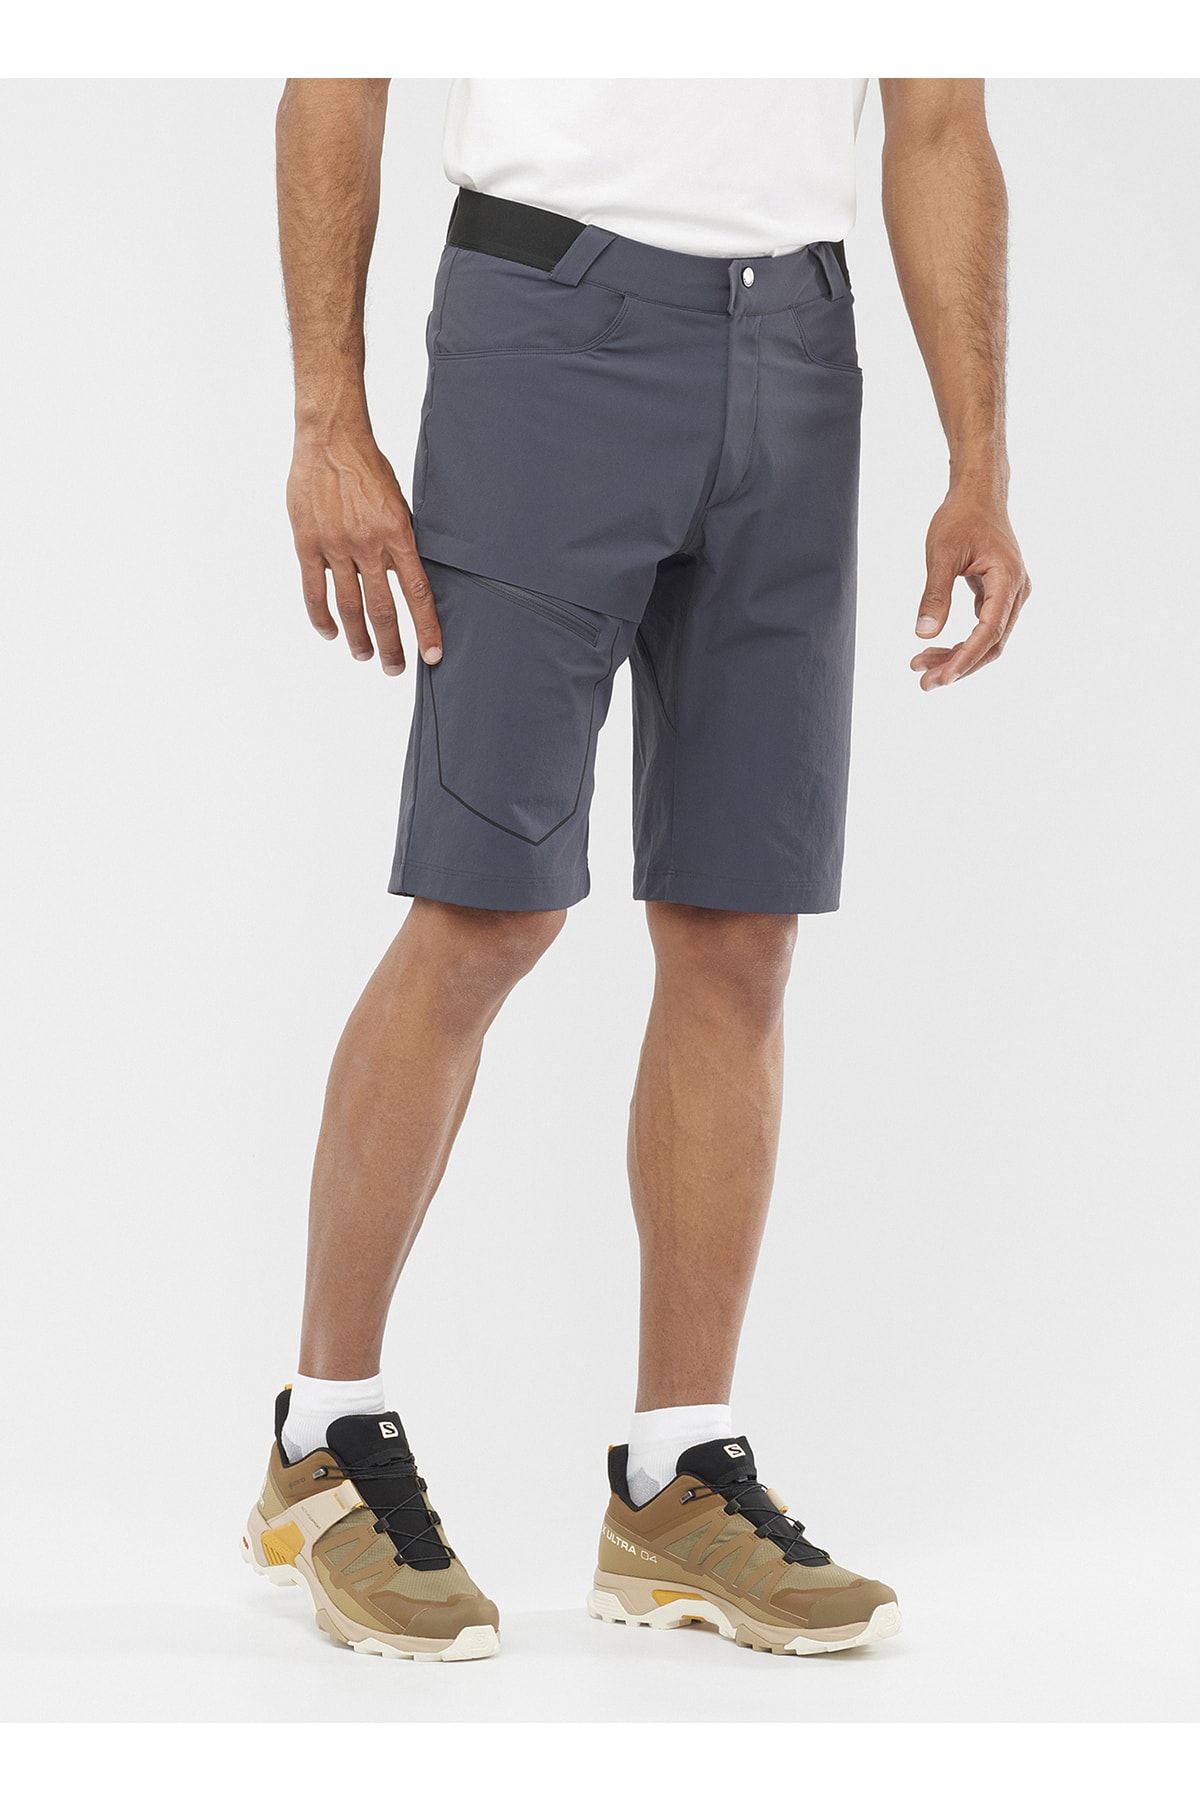 Salomon Normal Gri Erkek Şort Lc1718500 Wayfarer Shorts M